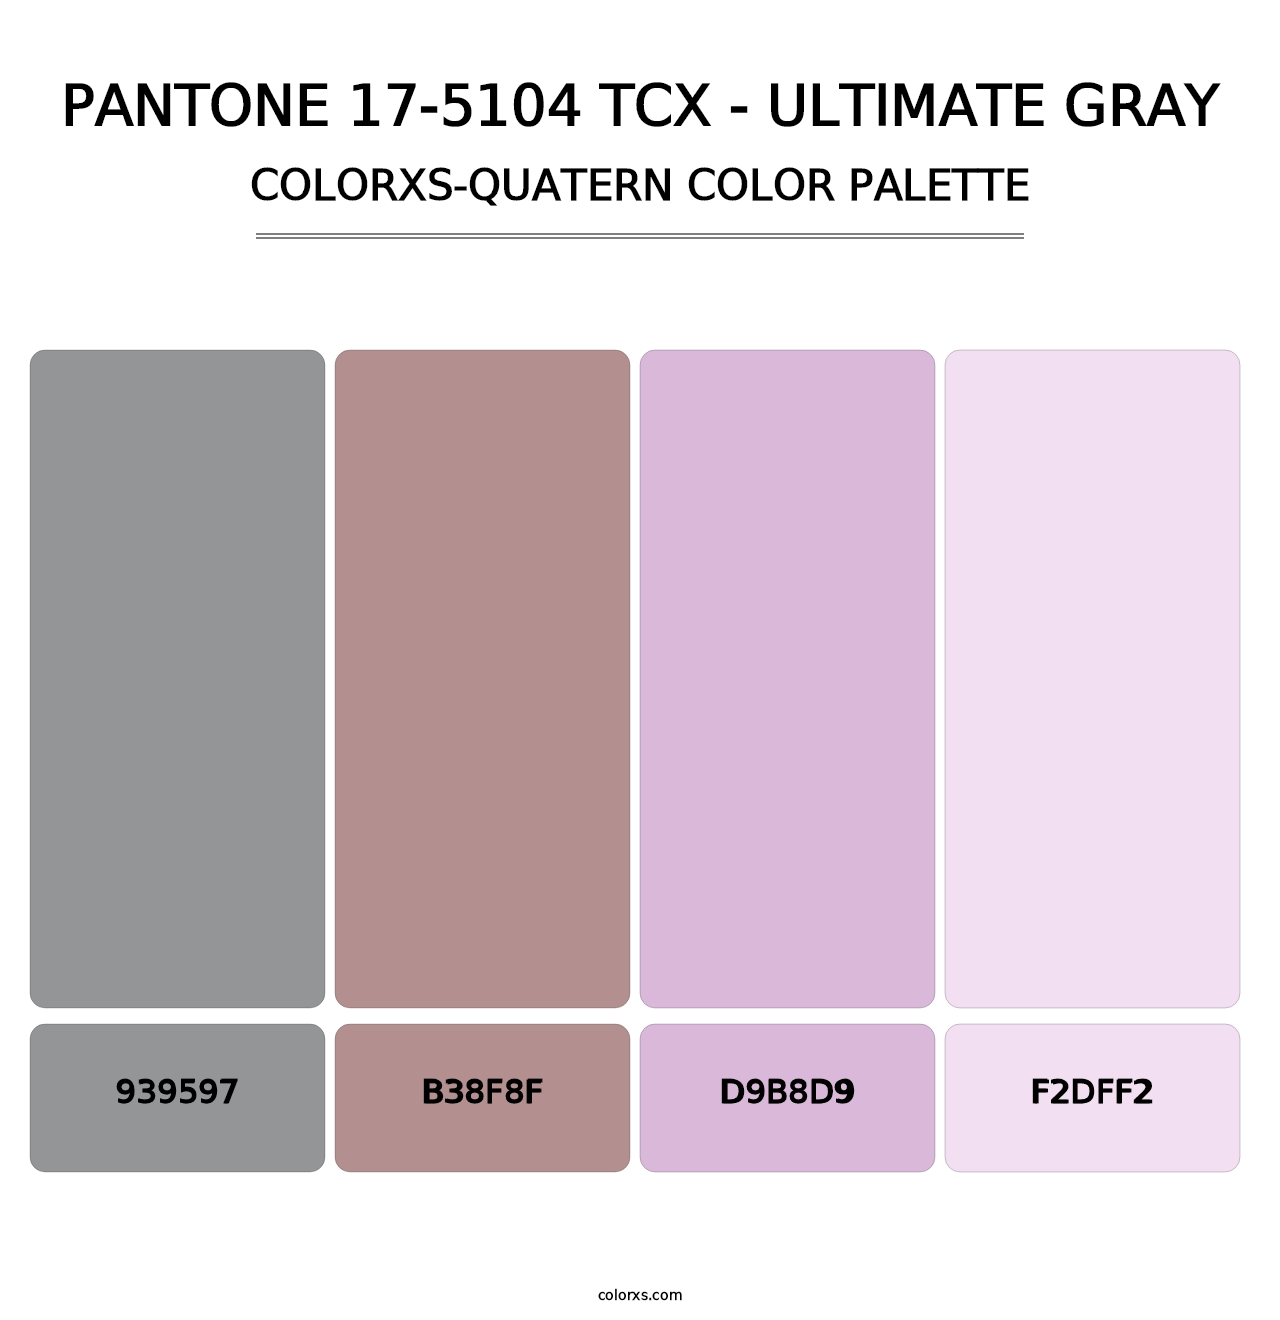 PANTONE 17-5104 TCX - Ultimate Gray - Colorxs Quatern Palette